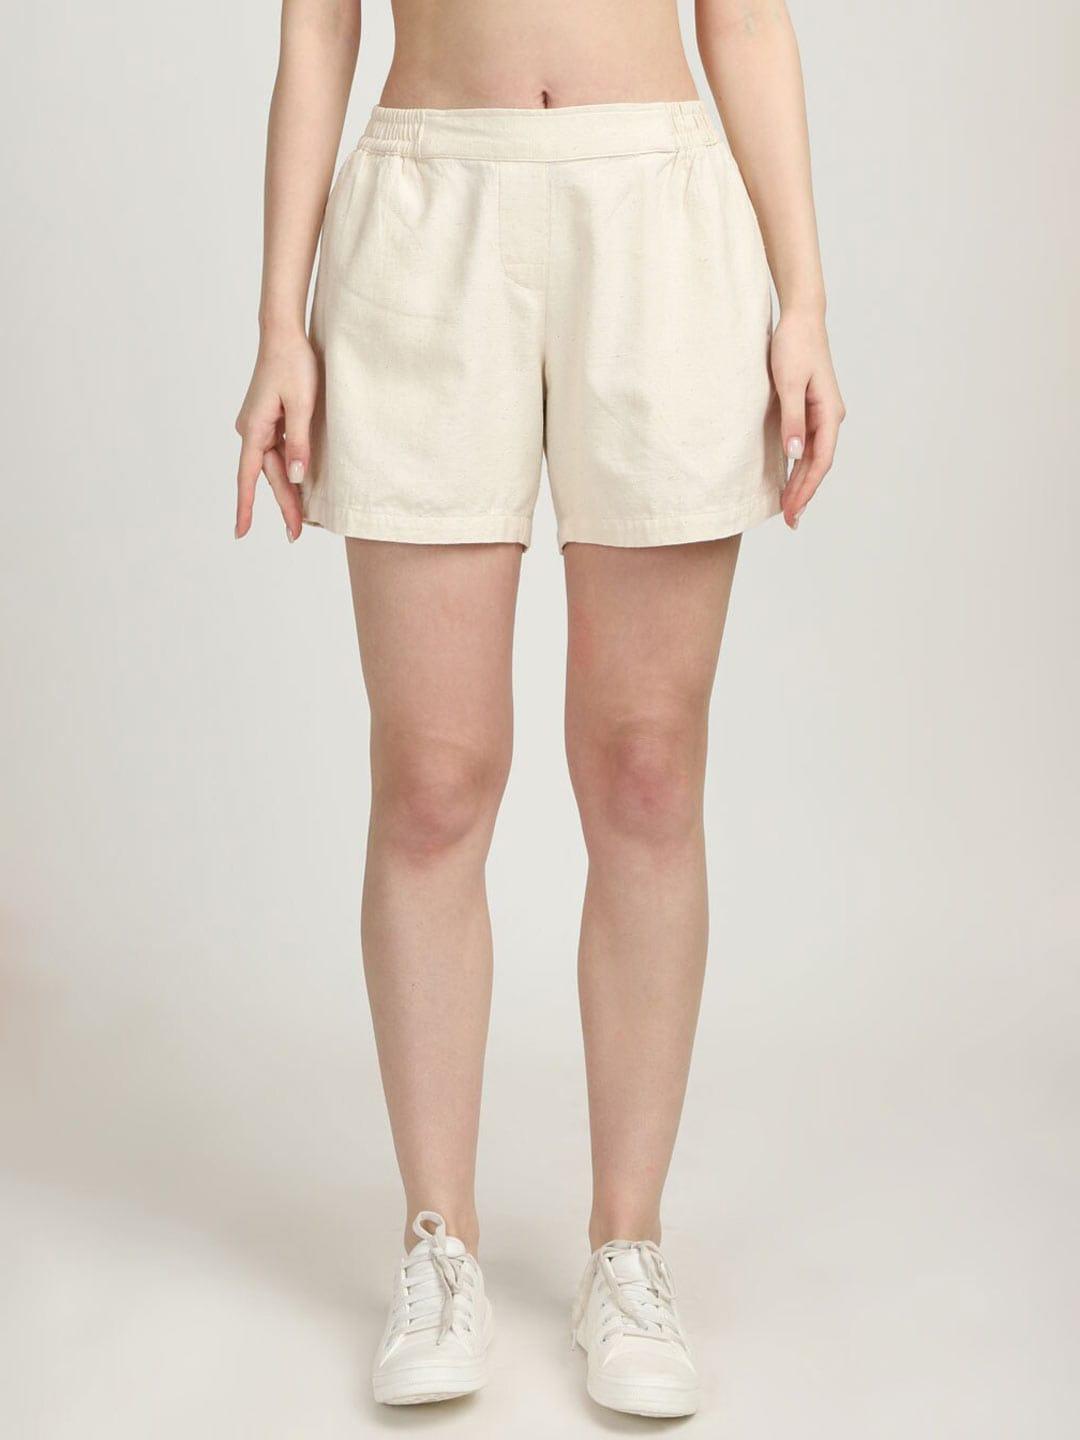 proyog women mid-rise pure linen shorts